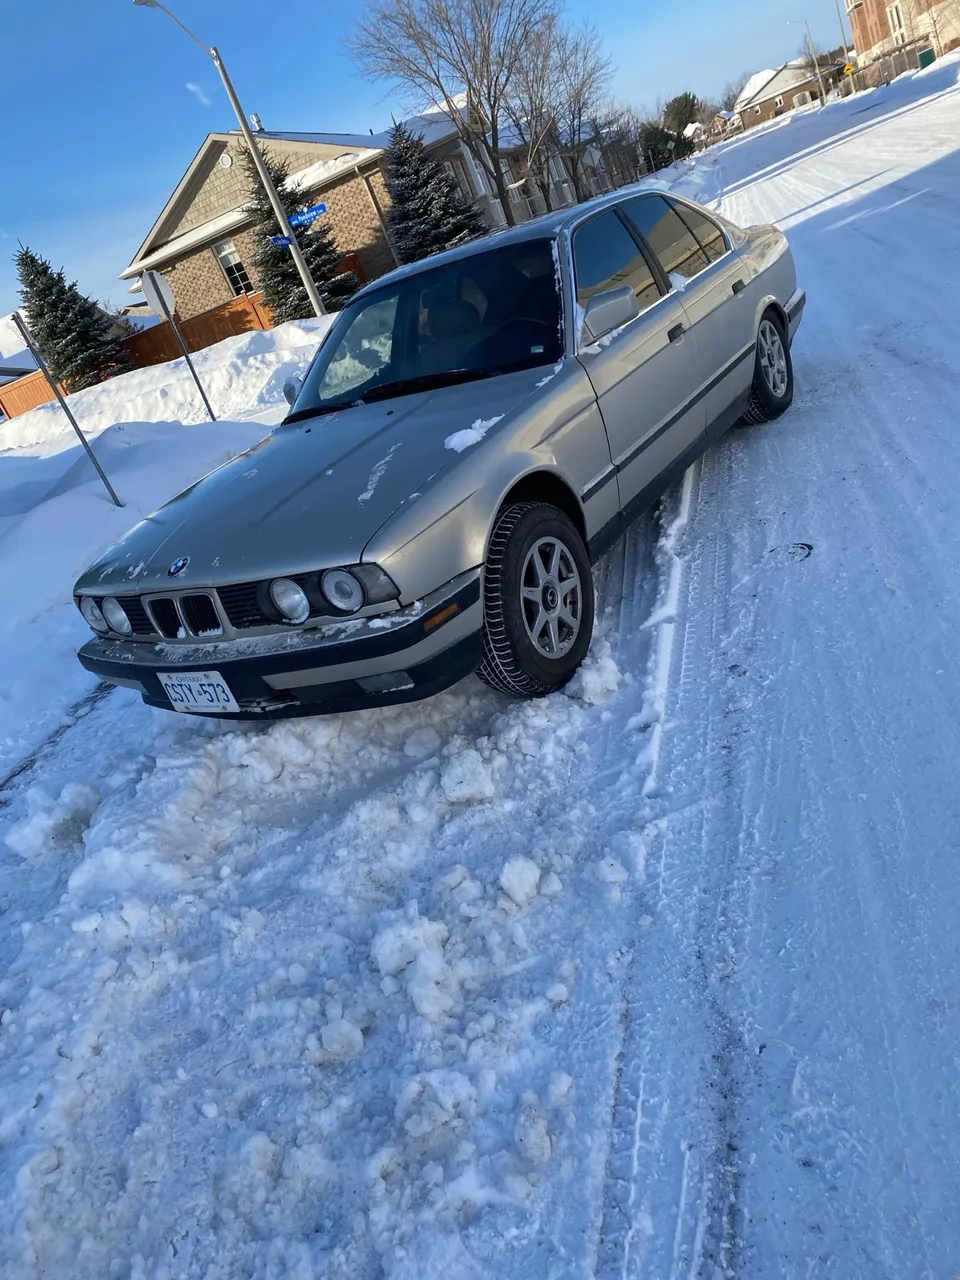 1990 BMW 5 Series